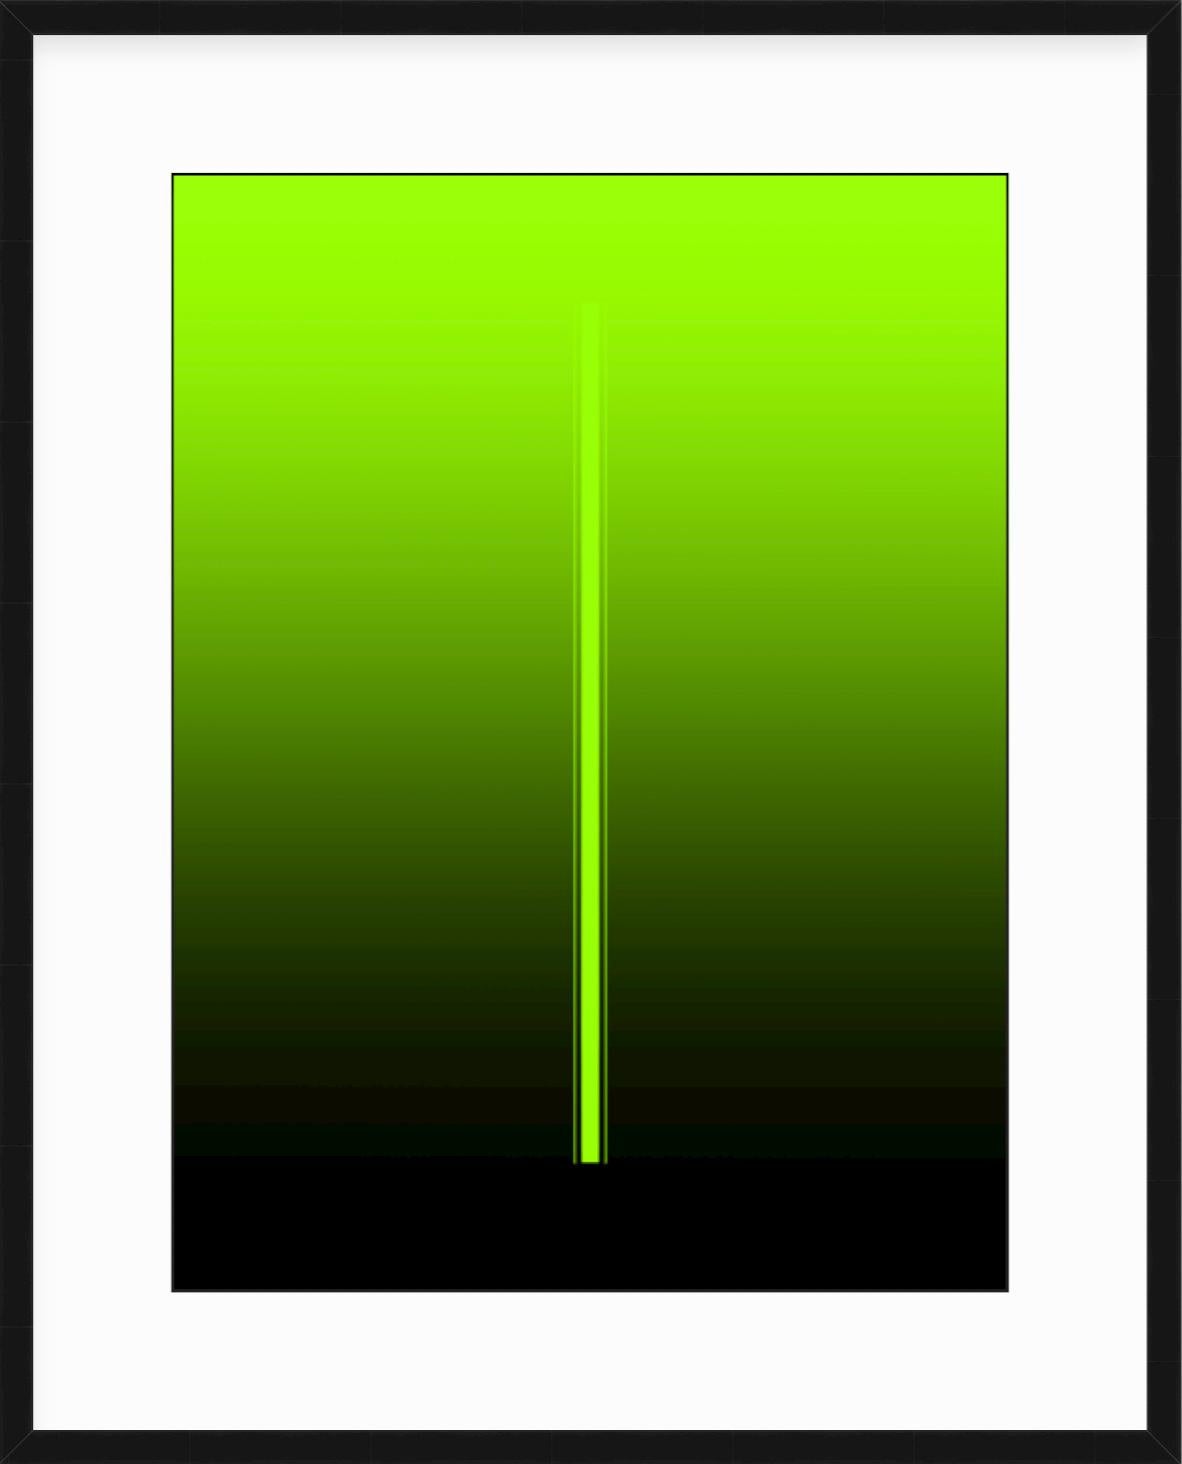 Pletneva Abstract Painting - "Billie" - minimal digital print, electric green, white mat